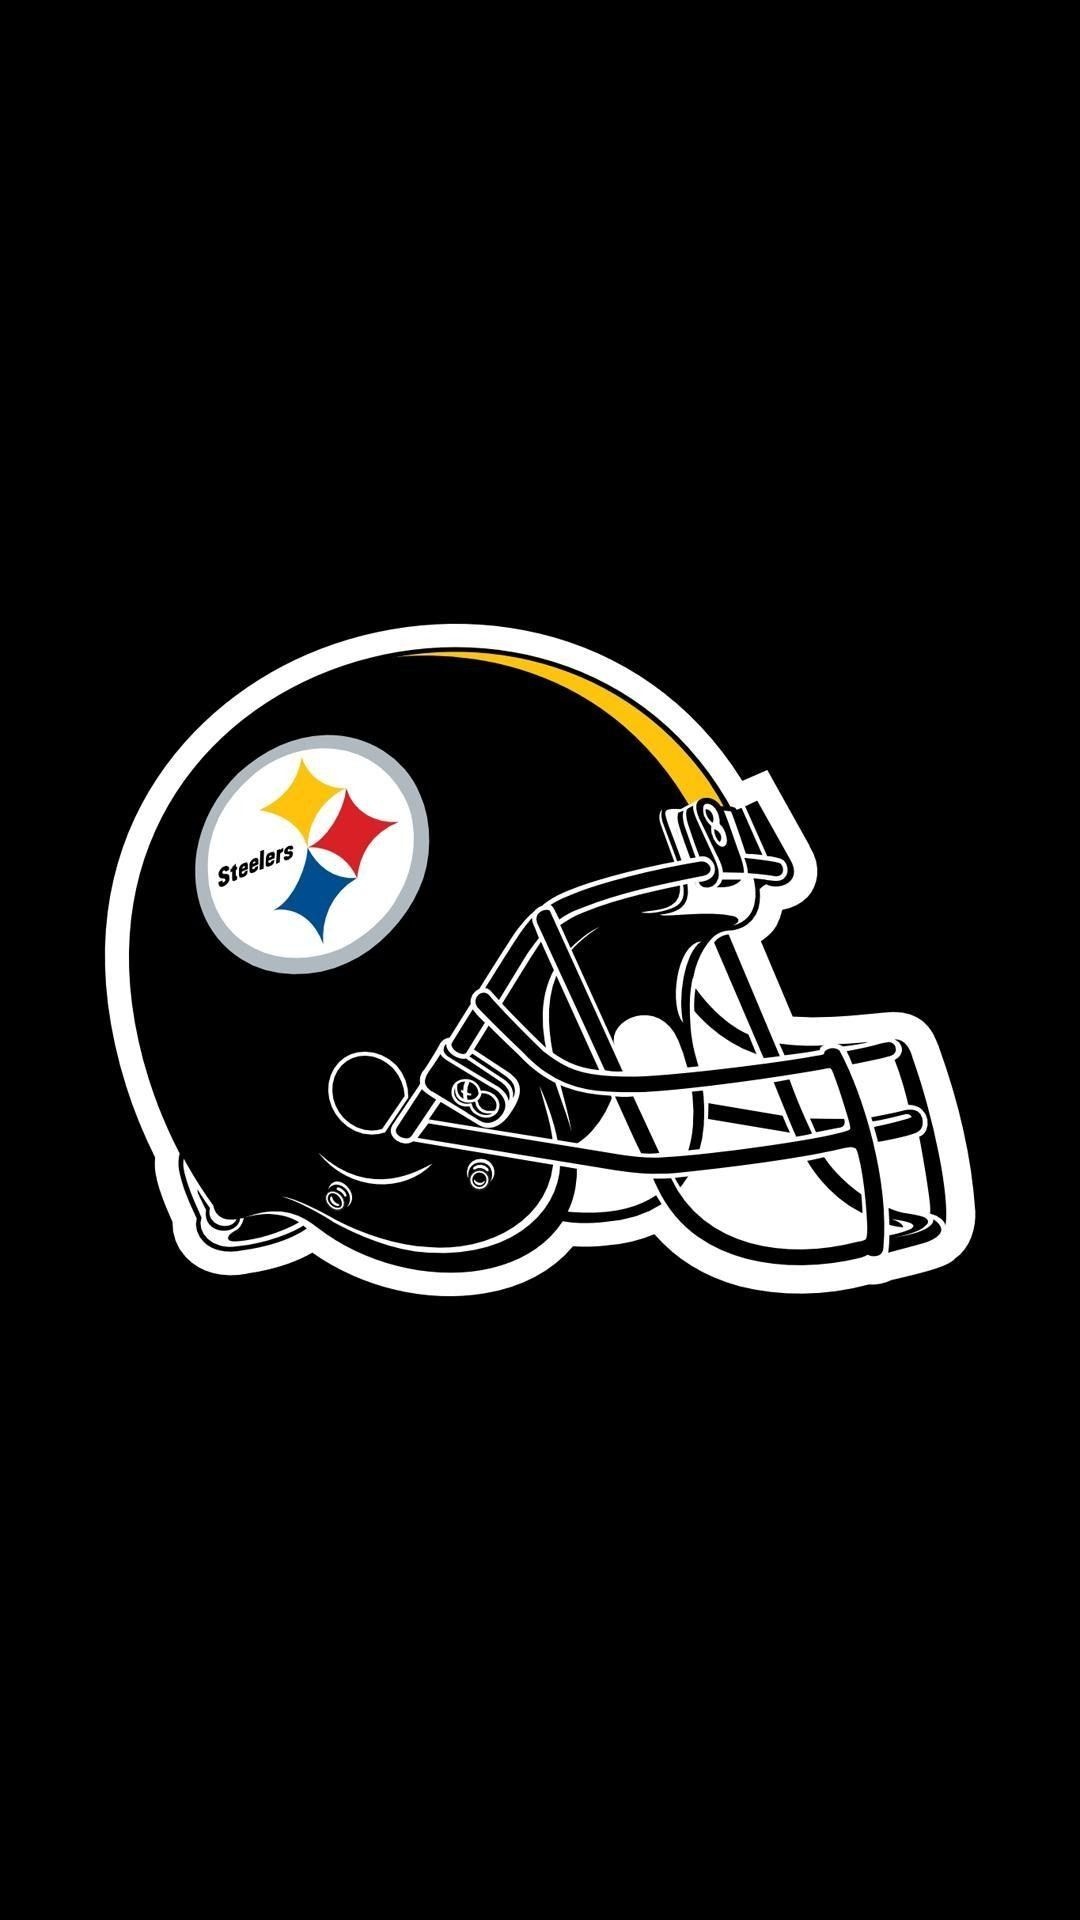 Pittsburgh Steelers, Team pride, Sports enthusiasm, Female fan representation, Football spirit, 1080x1920 Full HD Handy